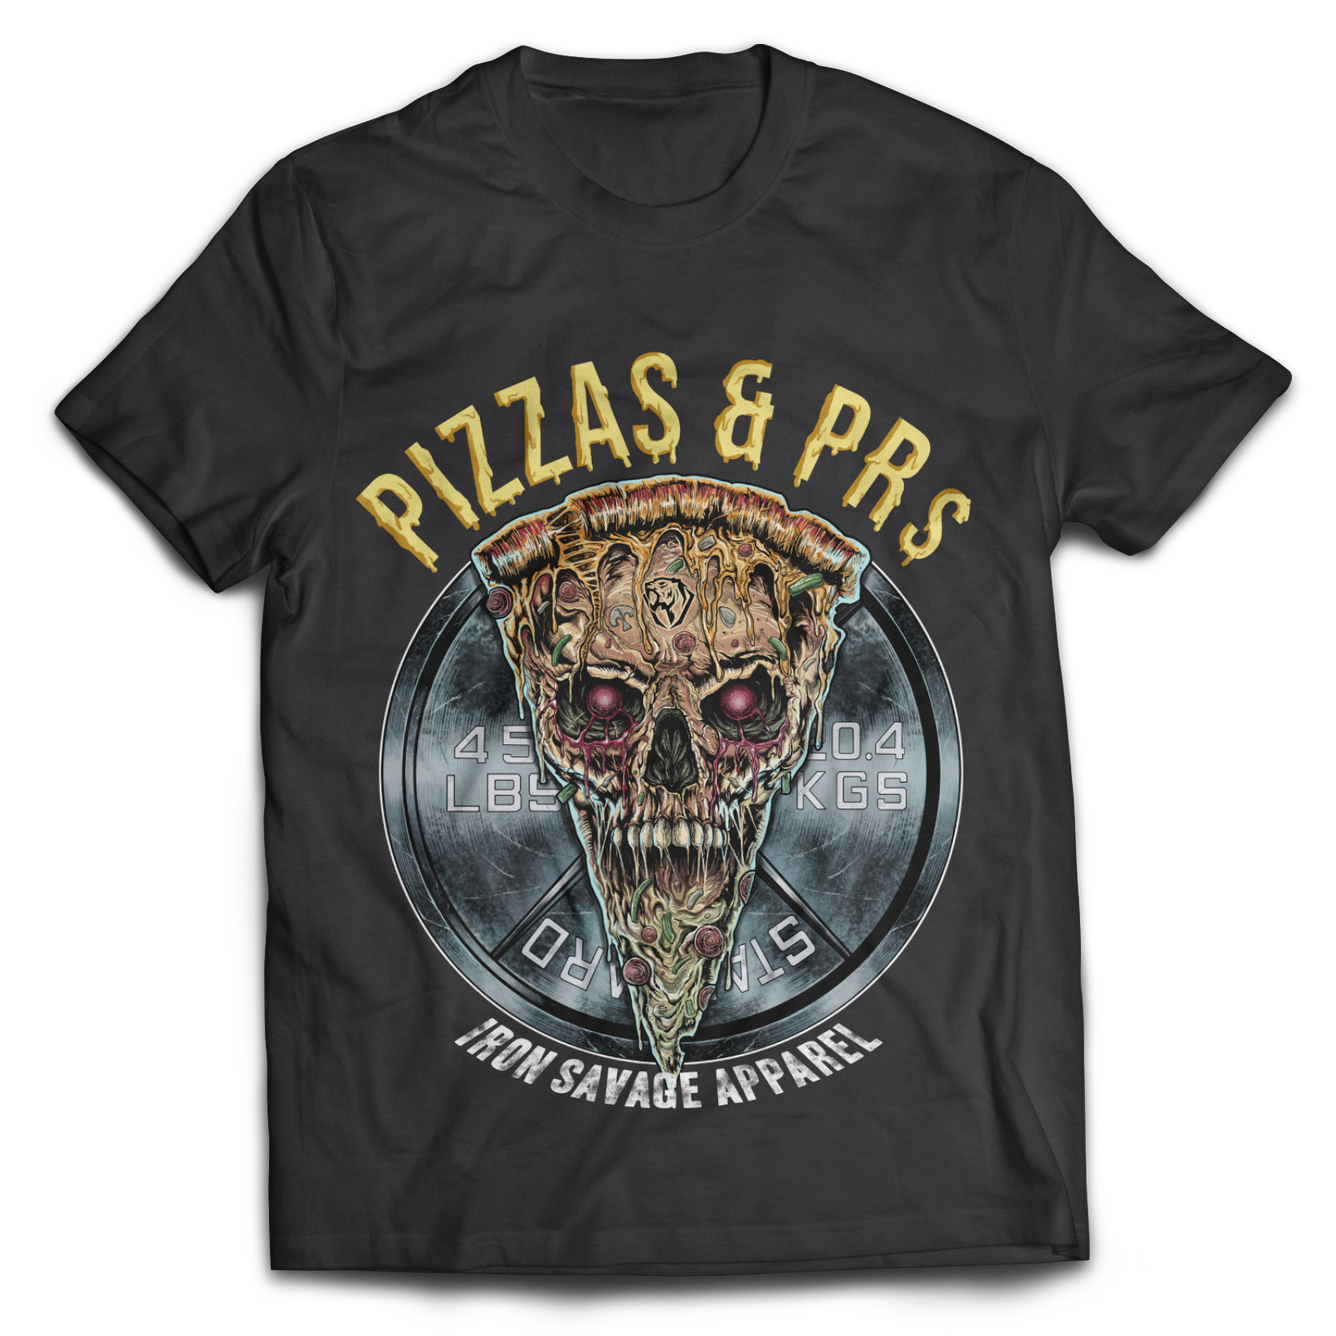 Pizzas & PRs T-Shirt